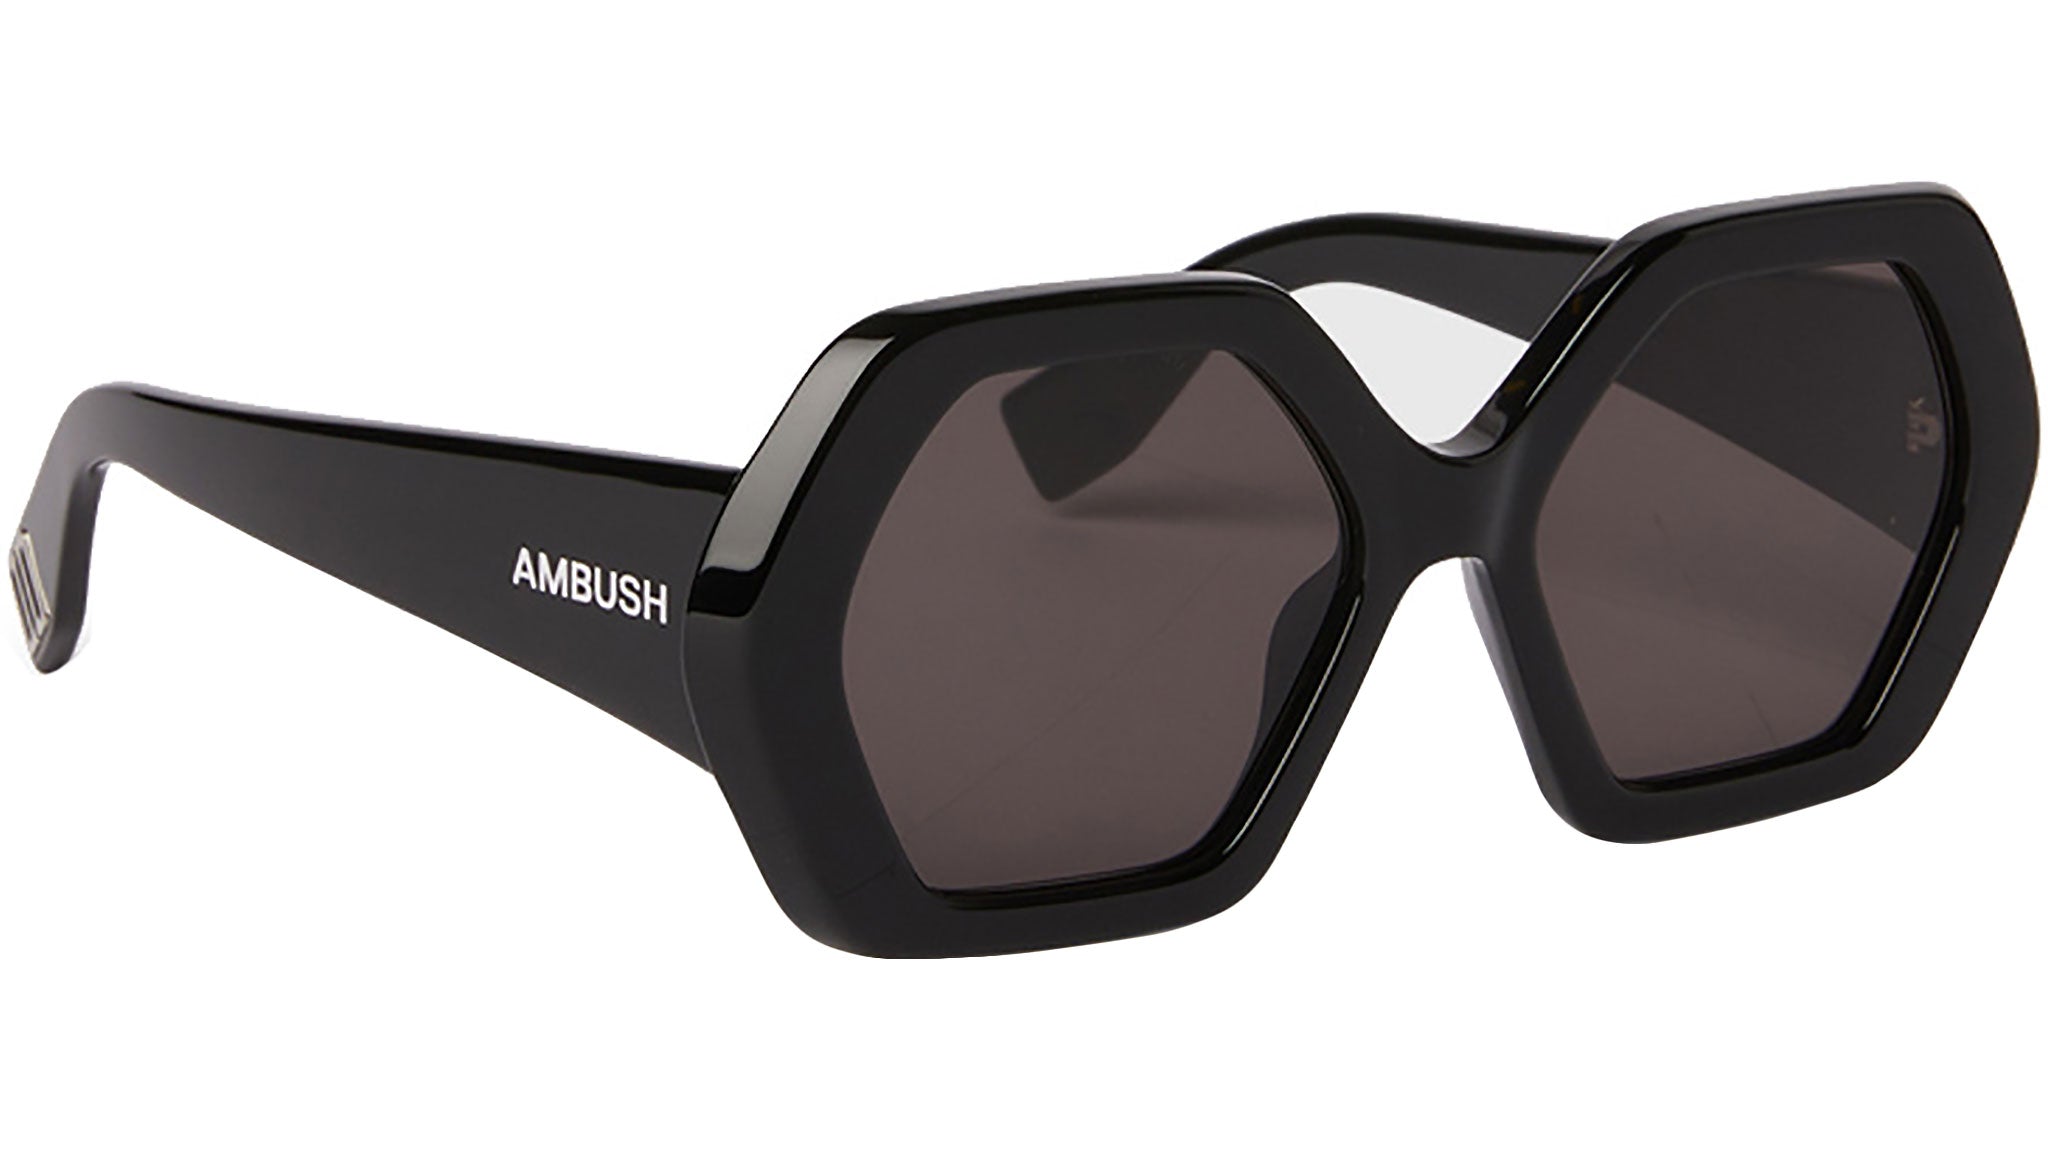 2021 Gentle Monster Limited Sunglasses Ambush Carabiner 1 01 Black Frame  Lenses